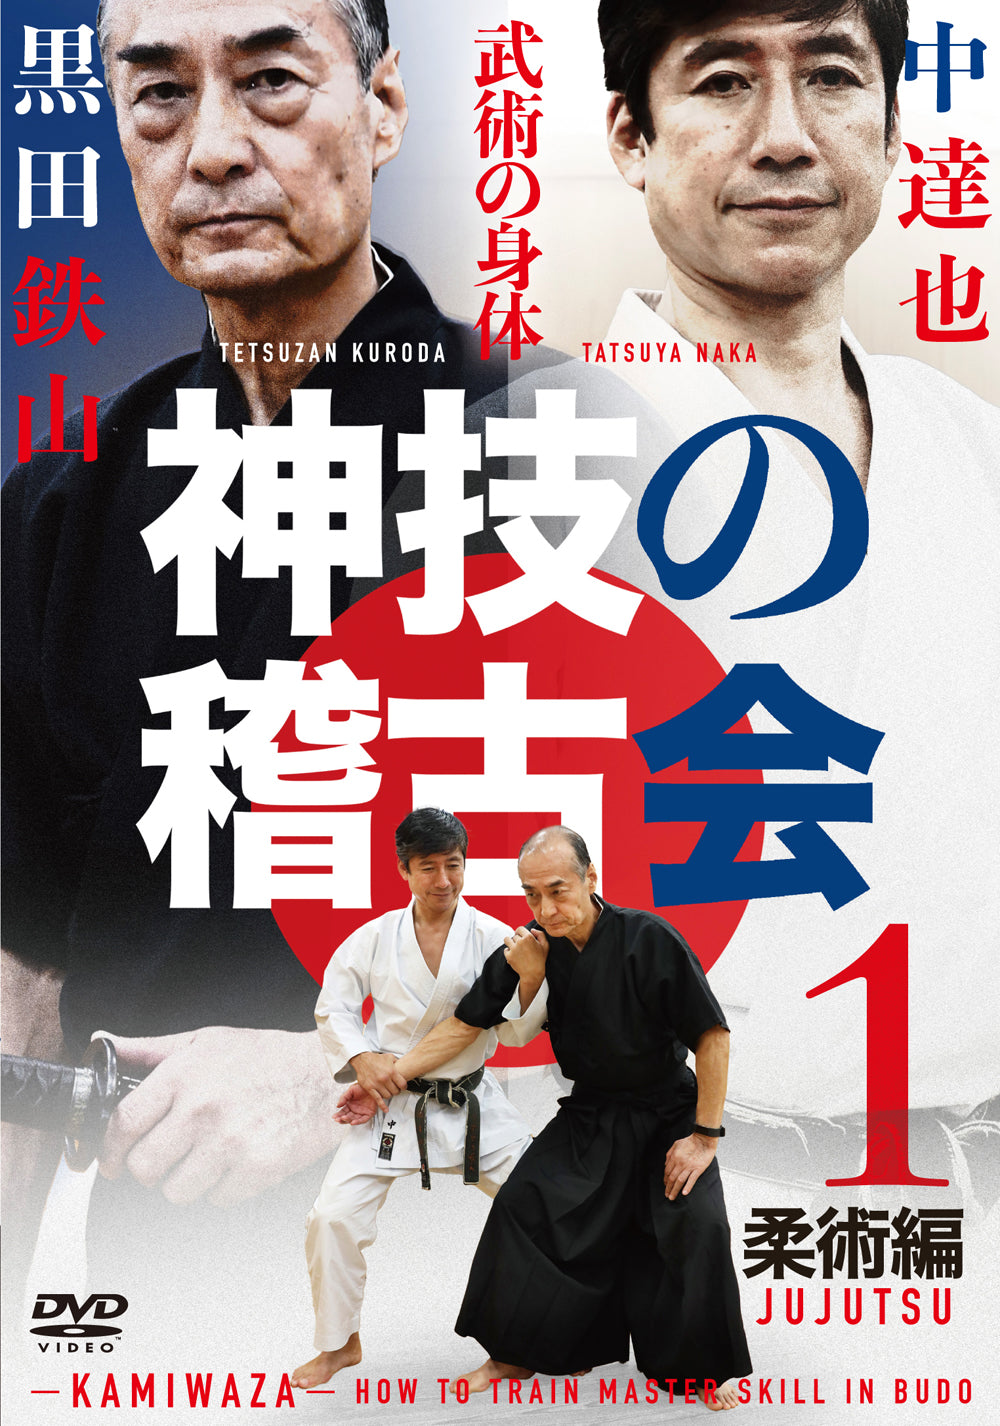 Kamiwaza: How to Train Budo Master Skills DVD 1 Jujutsu by Tetsuzan Kuroda & Tatsuya Naka - Budovideos Inc